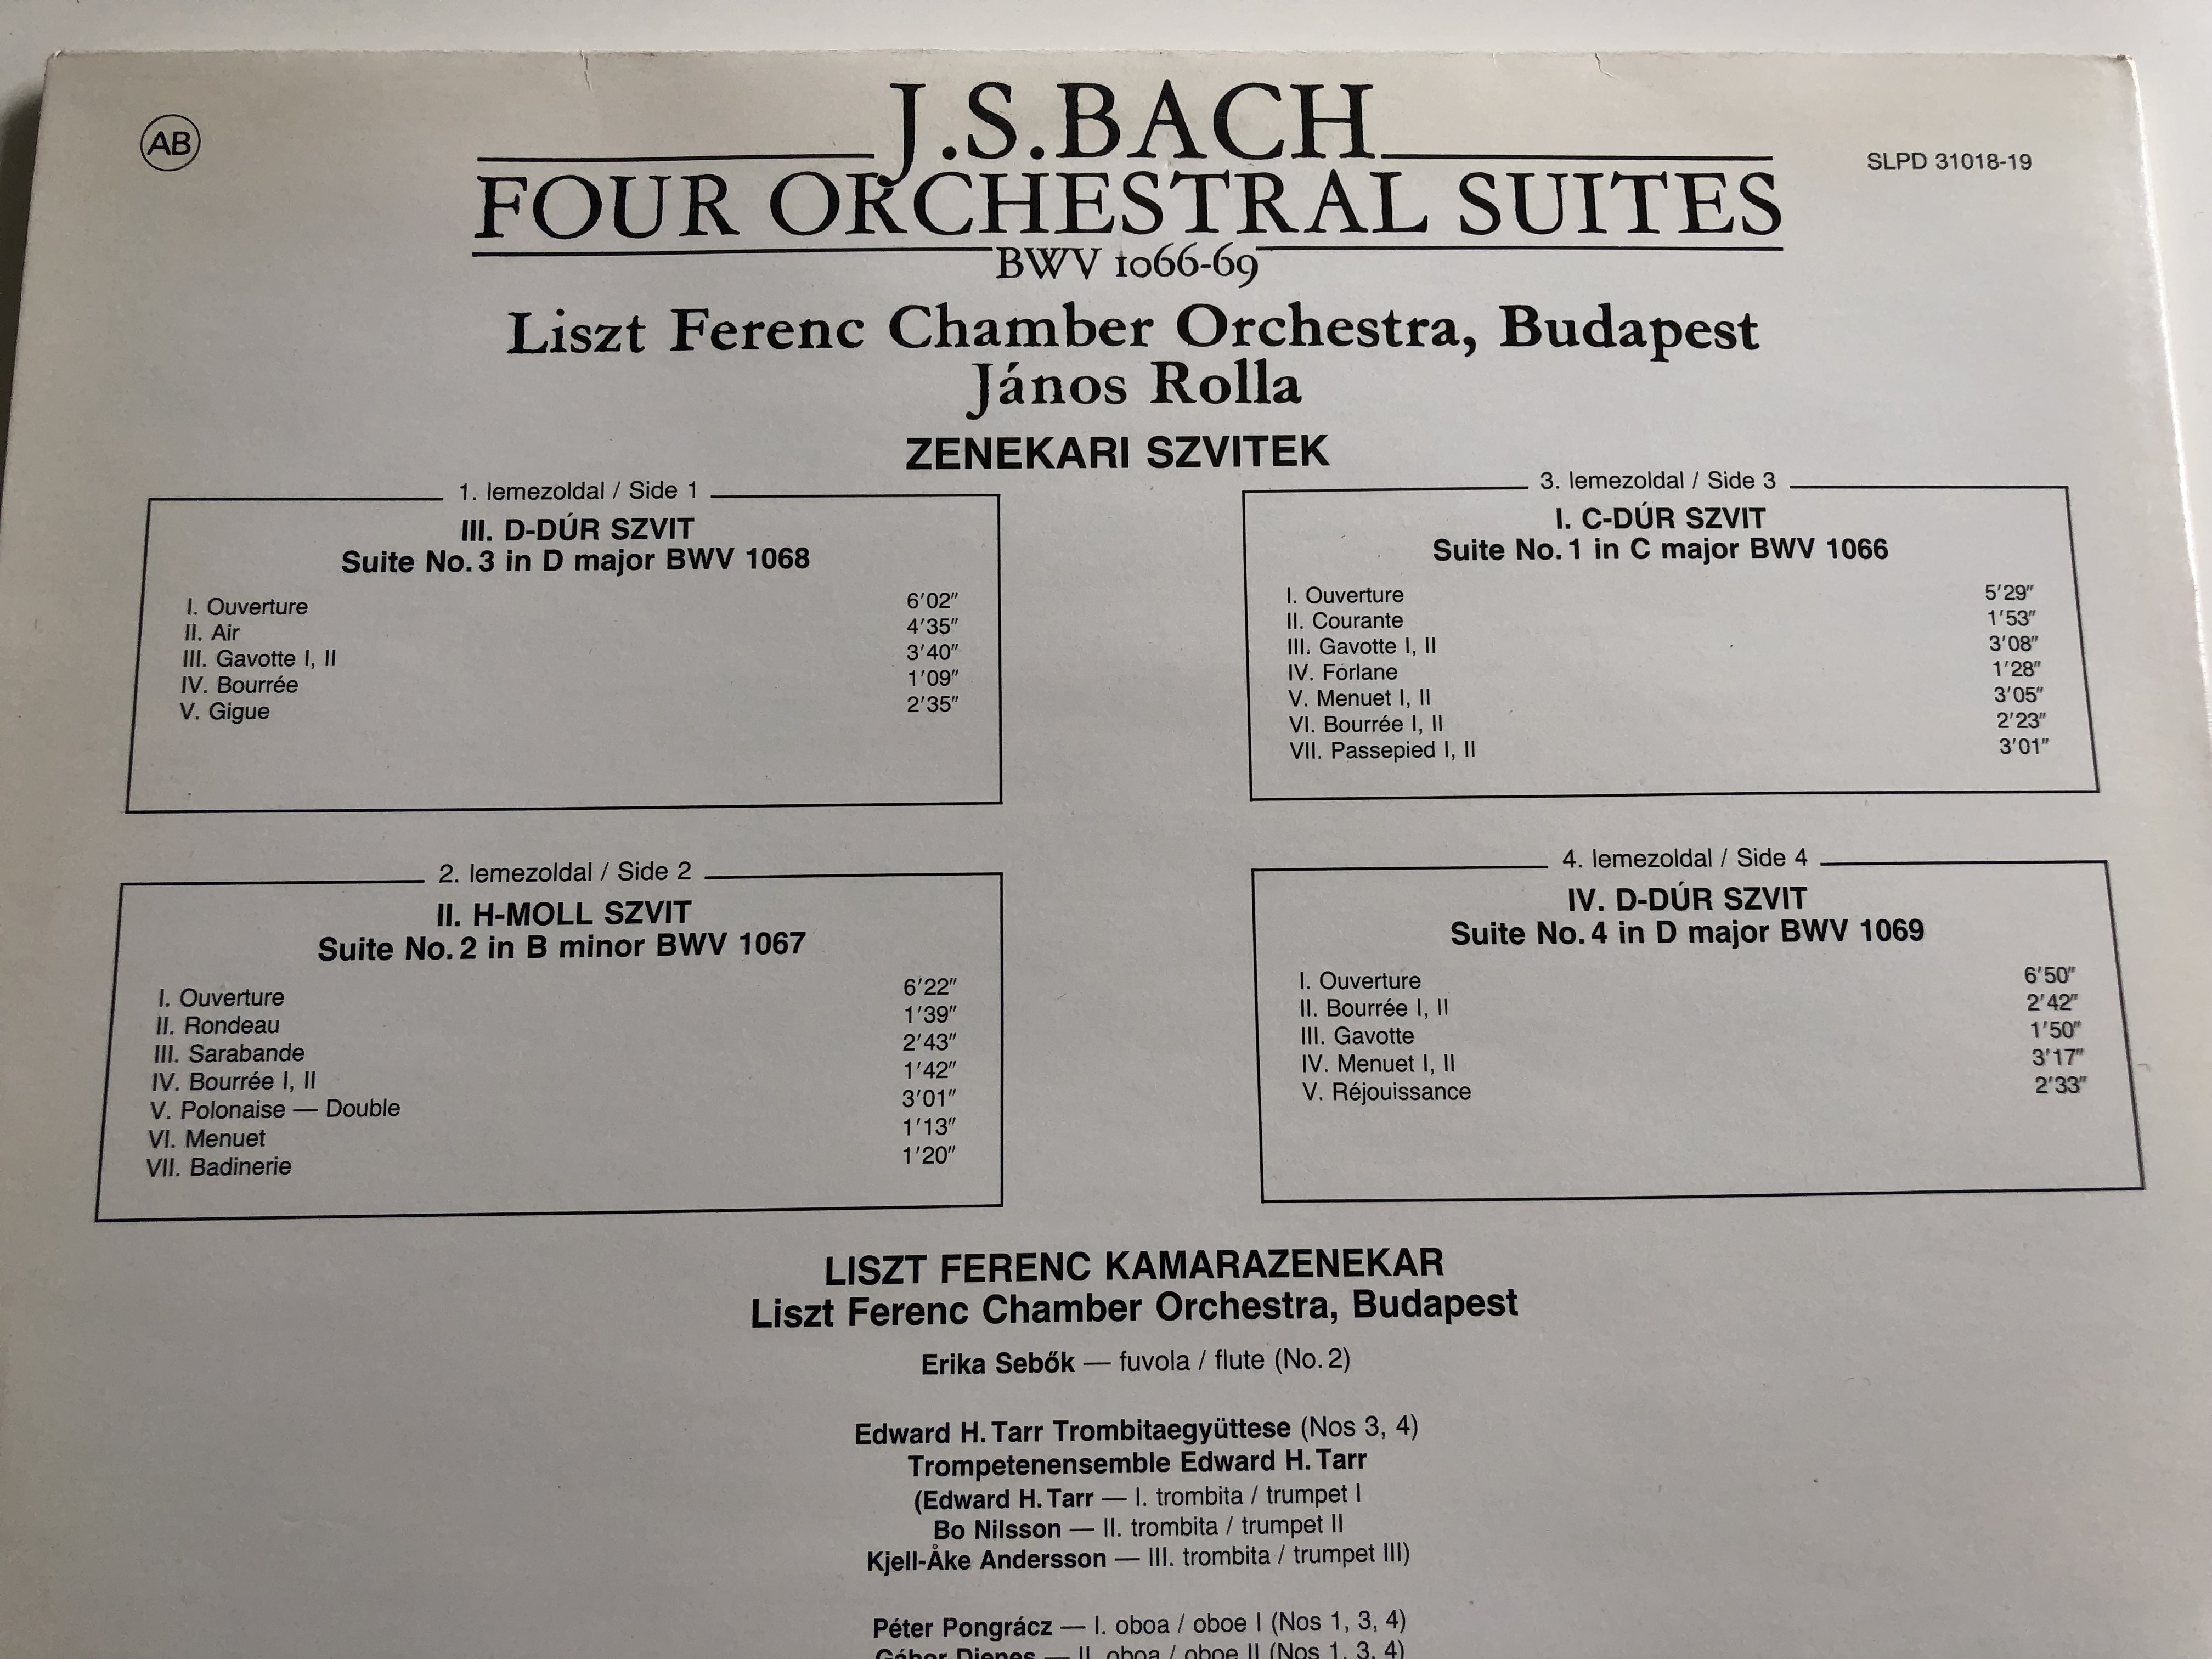 j.s.bach-four-orchestral-suites-bwv-1066-69-liszt-ferenc-chamber-orchestra-budapest-j-nos-rolla-hungaroton-2x-lp-digital-stereo-slpd-31018-19-5-.jpg